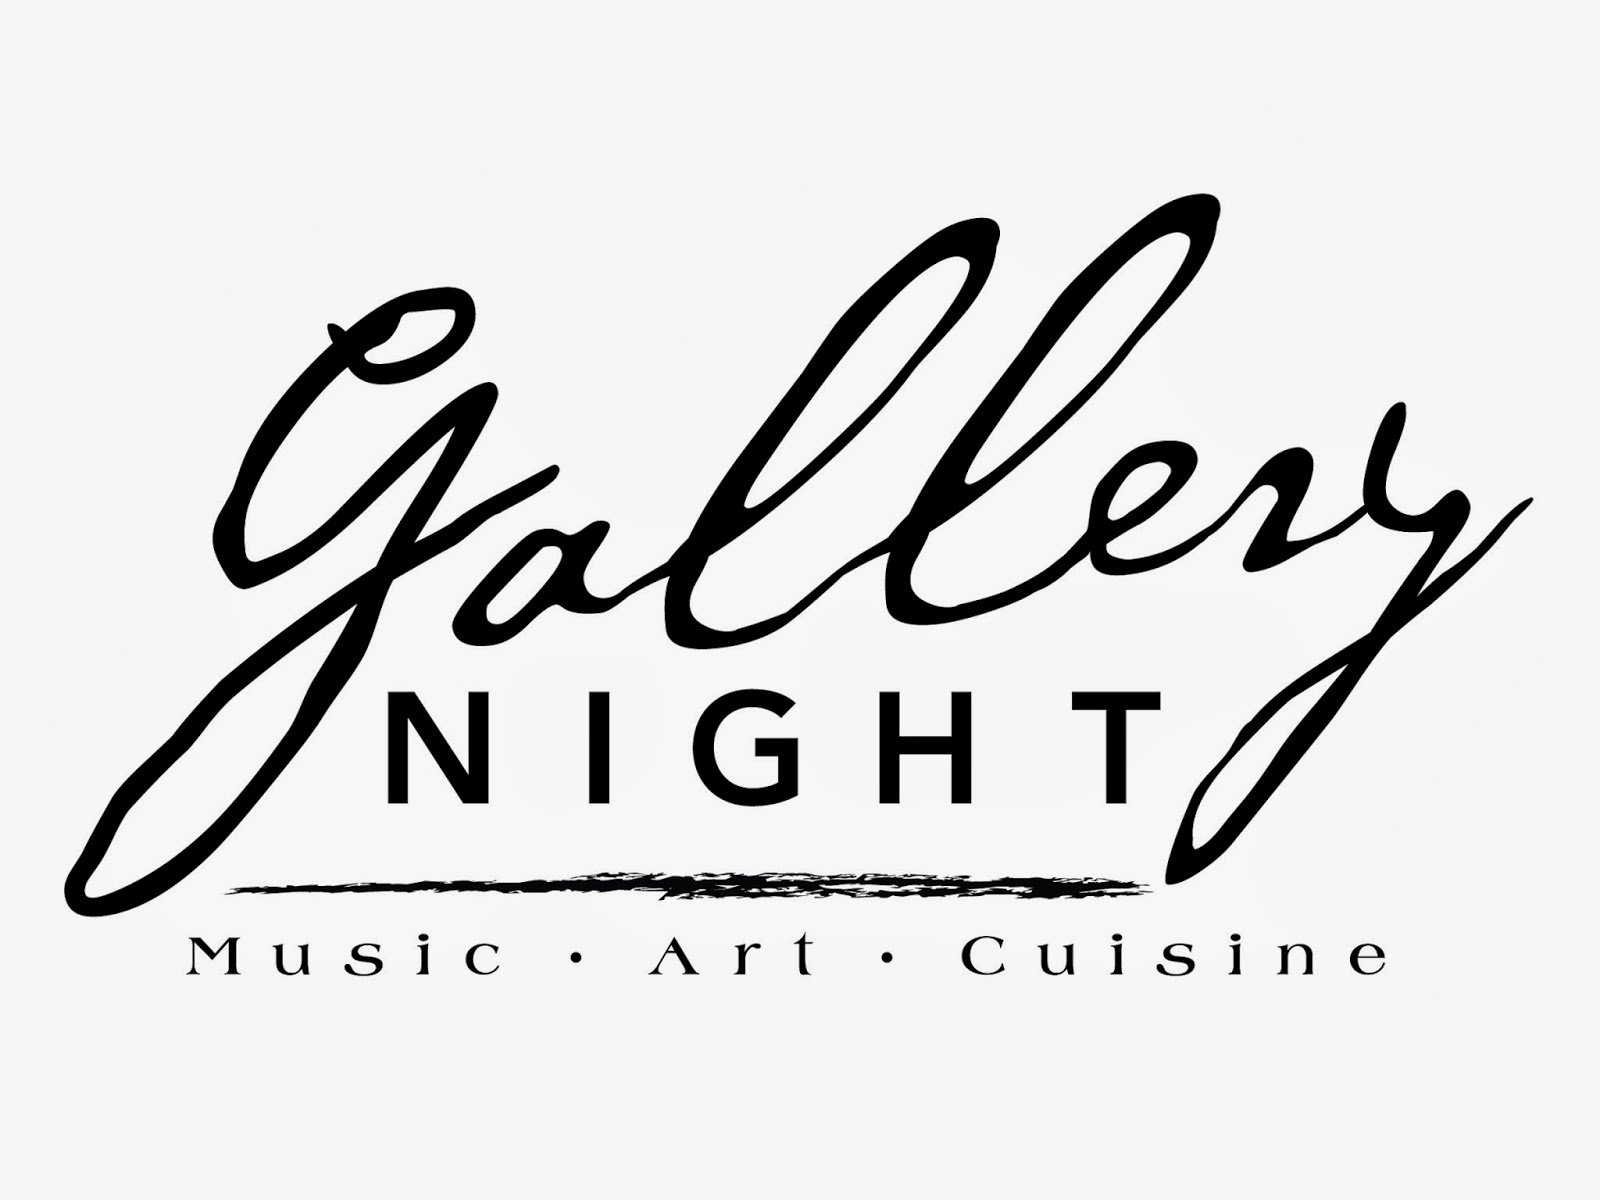 Gallery Night Graphic 2.JPG